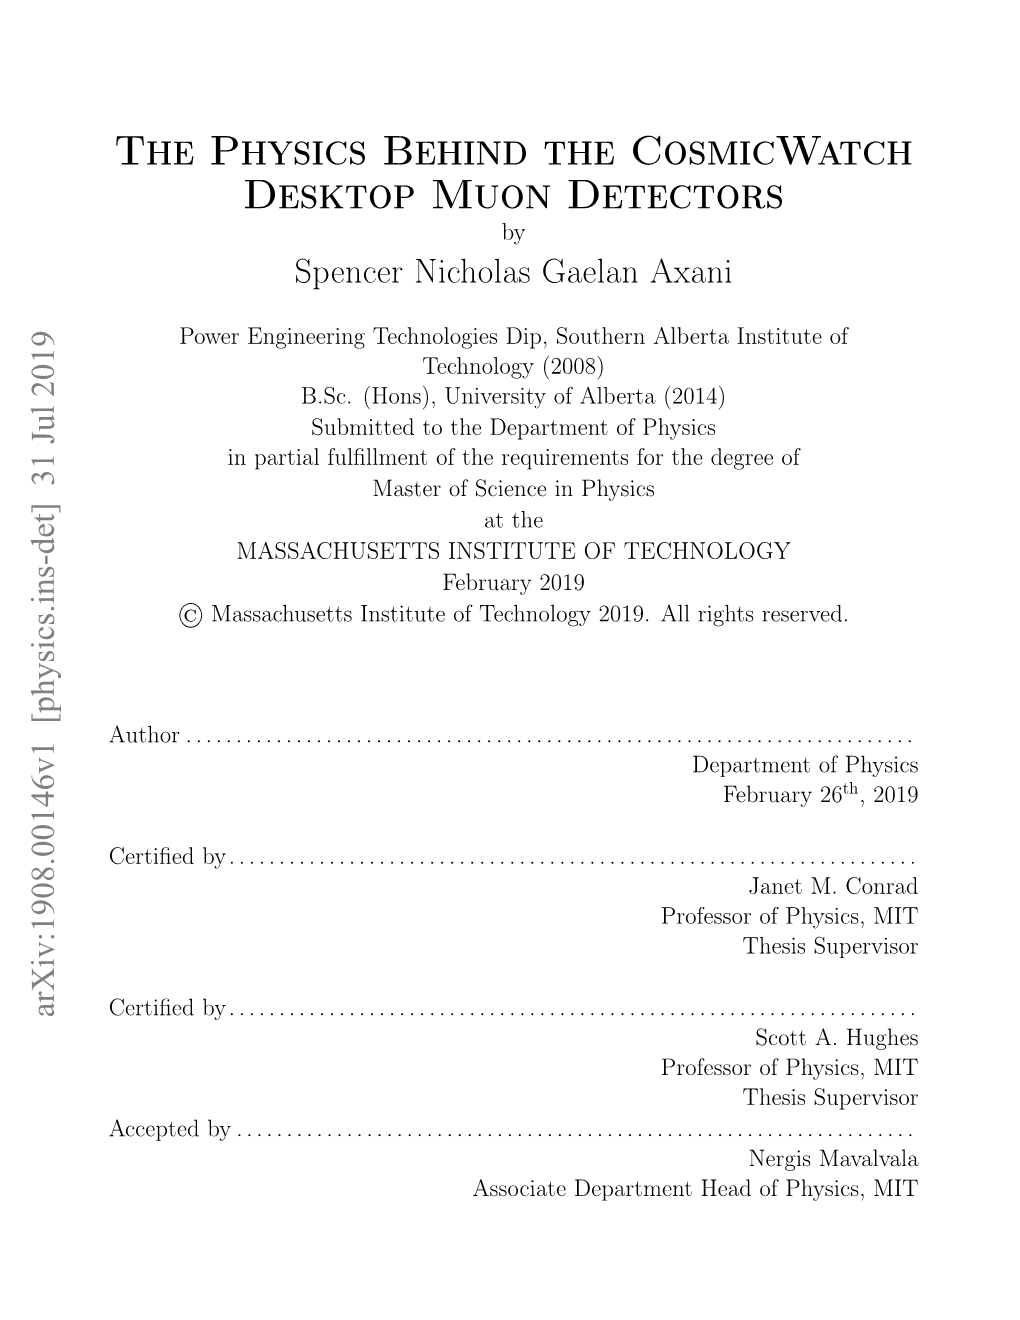 The Physics Behind the Cosmicwatch Desktop Muon Detectors by Spencer Nicholas Gaelan Axani